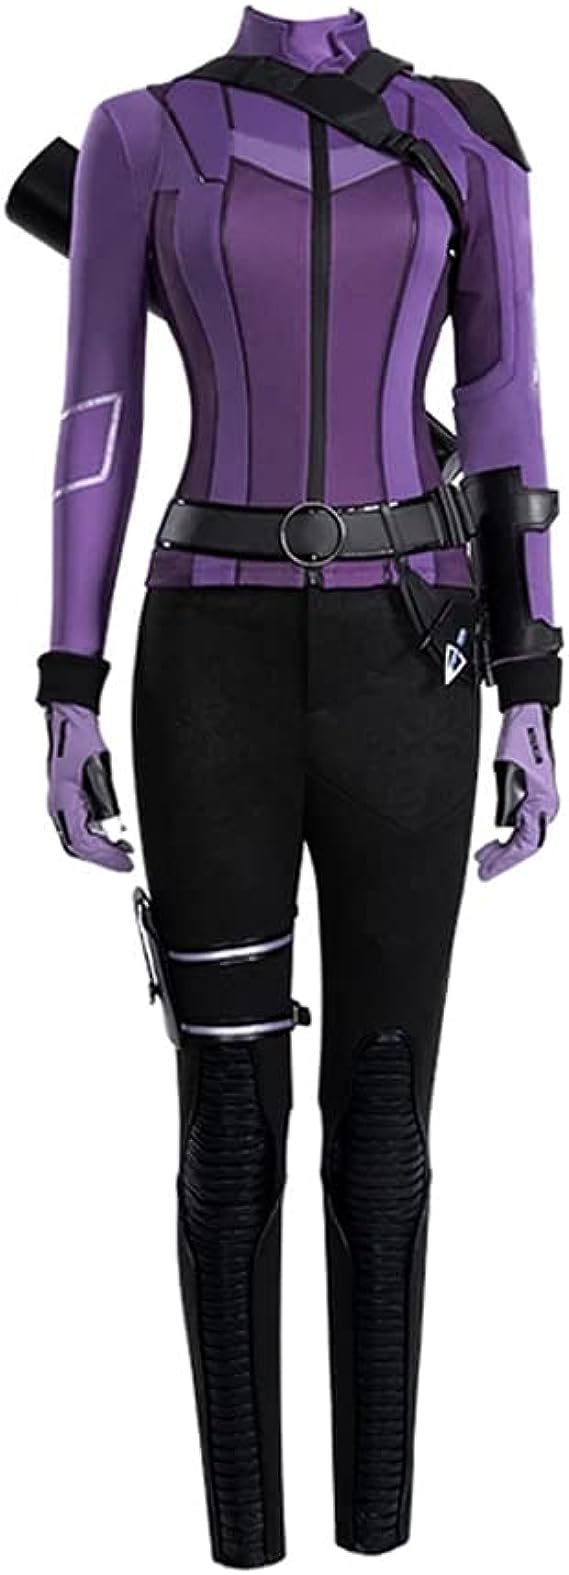 Mzxdy Female Women's Hawkeye Costume Uniform for Halloween Party Medium